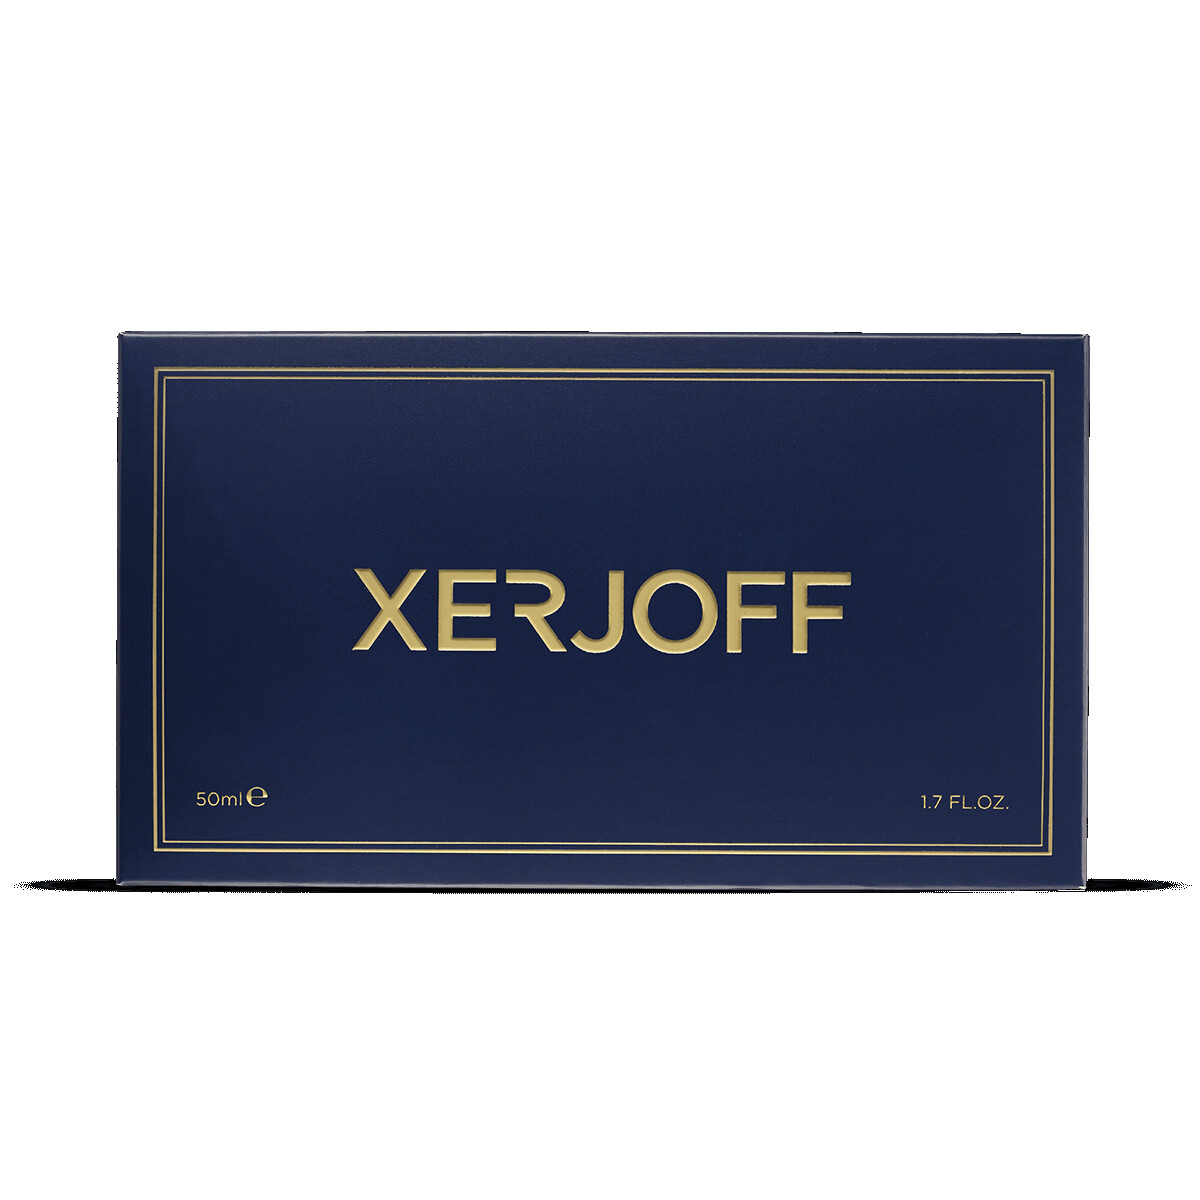 Xerjoff JOIN THE CLUB K'Bridge Club Eau de Parfum